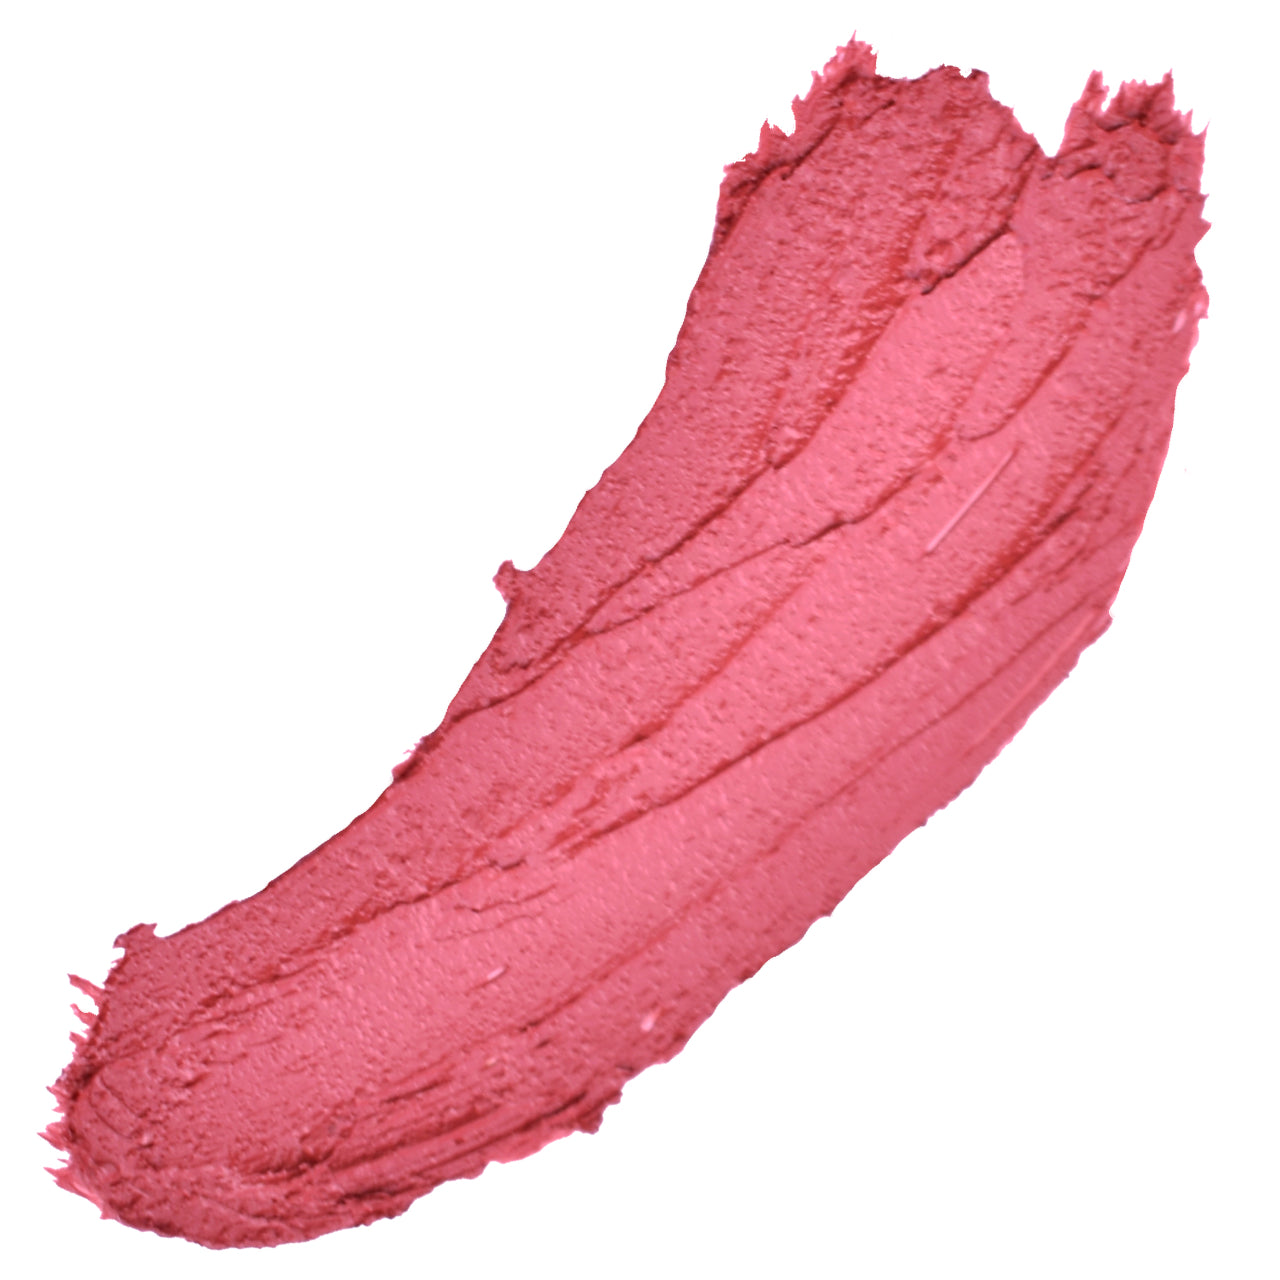 Cameo - Soft Peach Pink Organic Long Lasting Lipstick